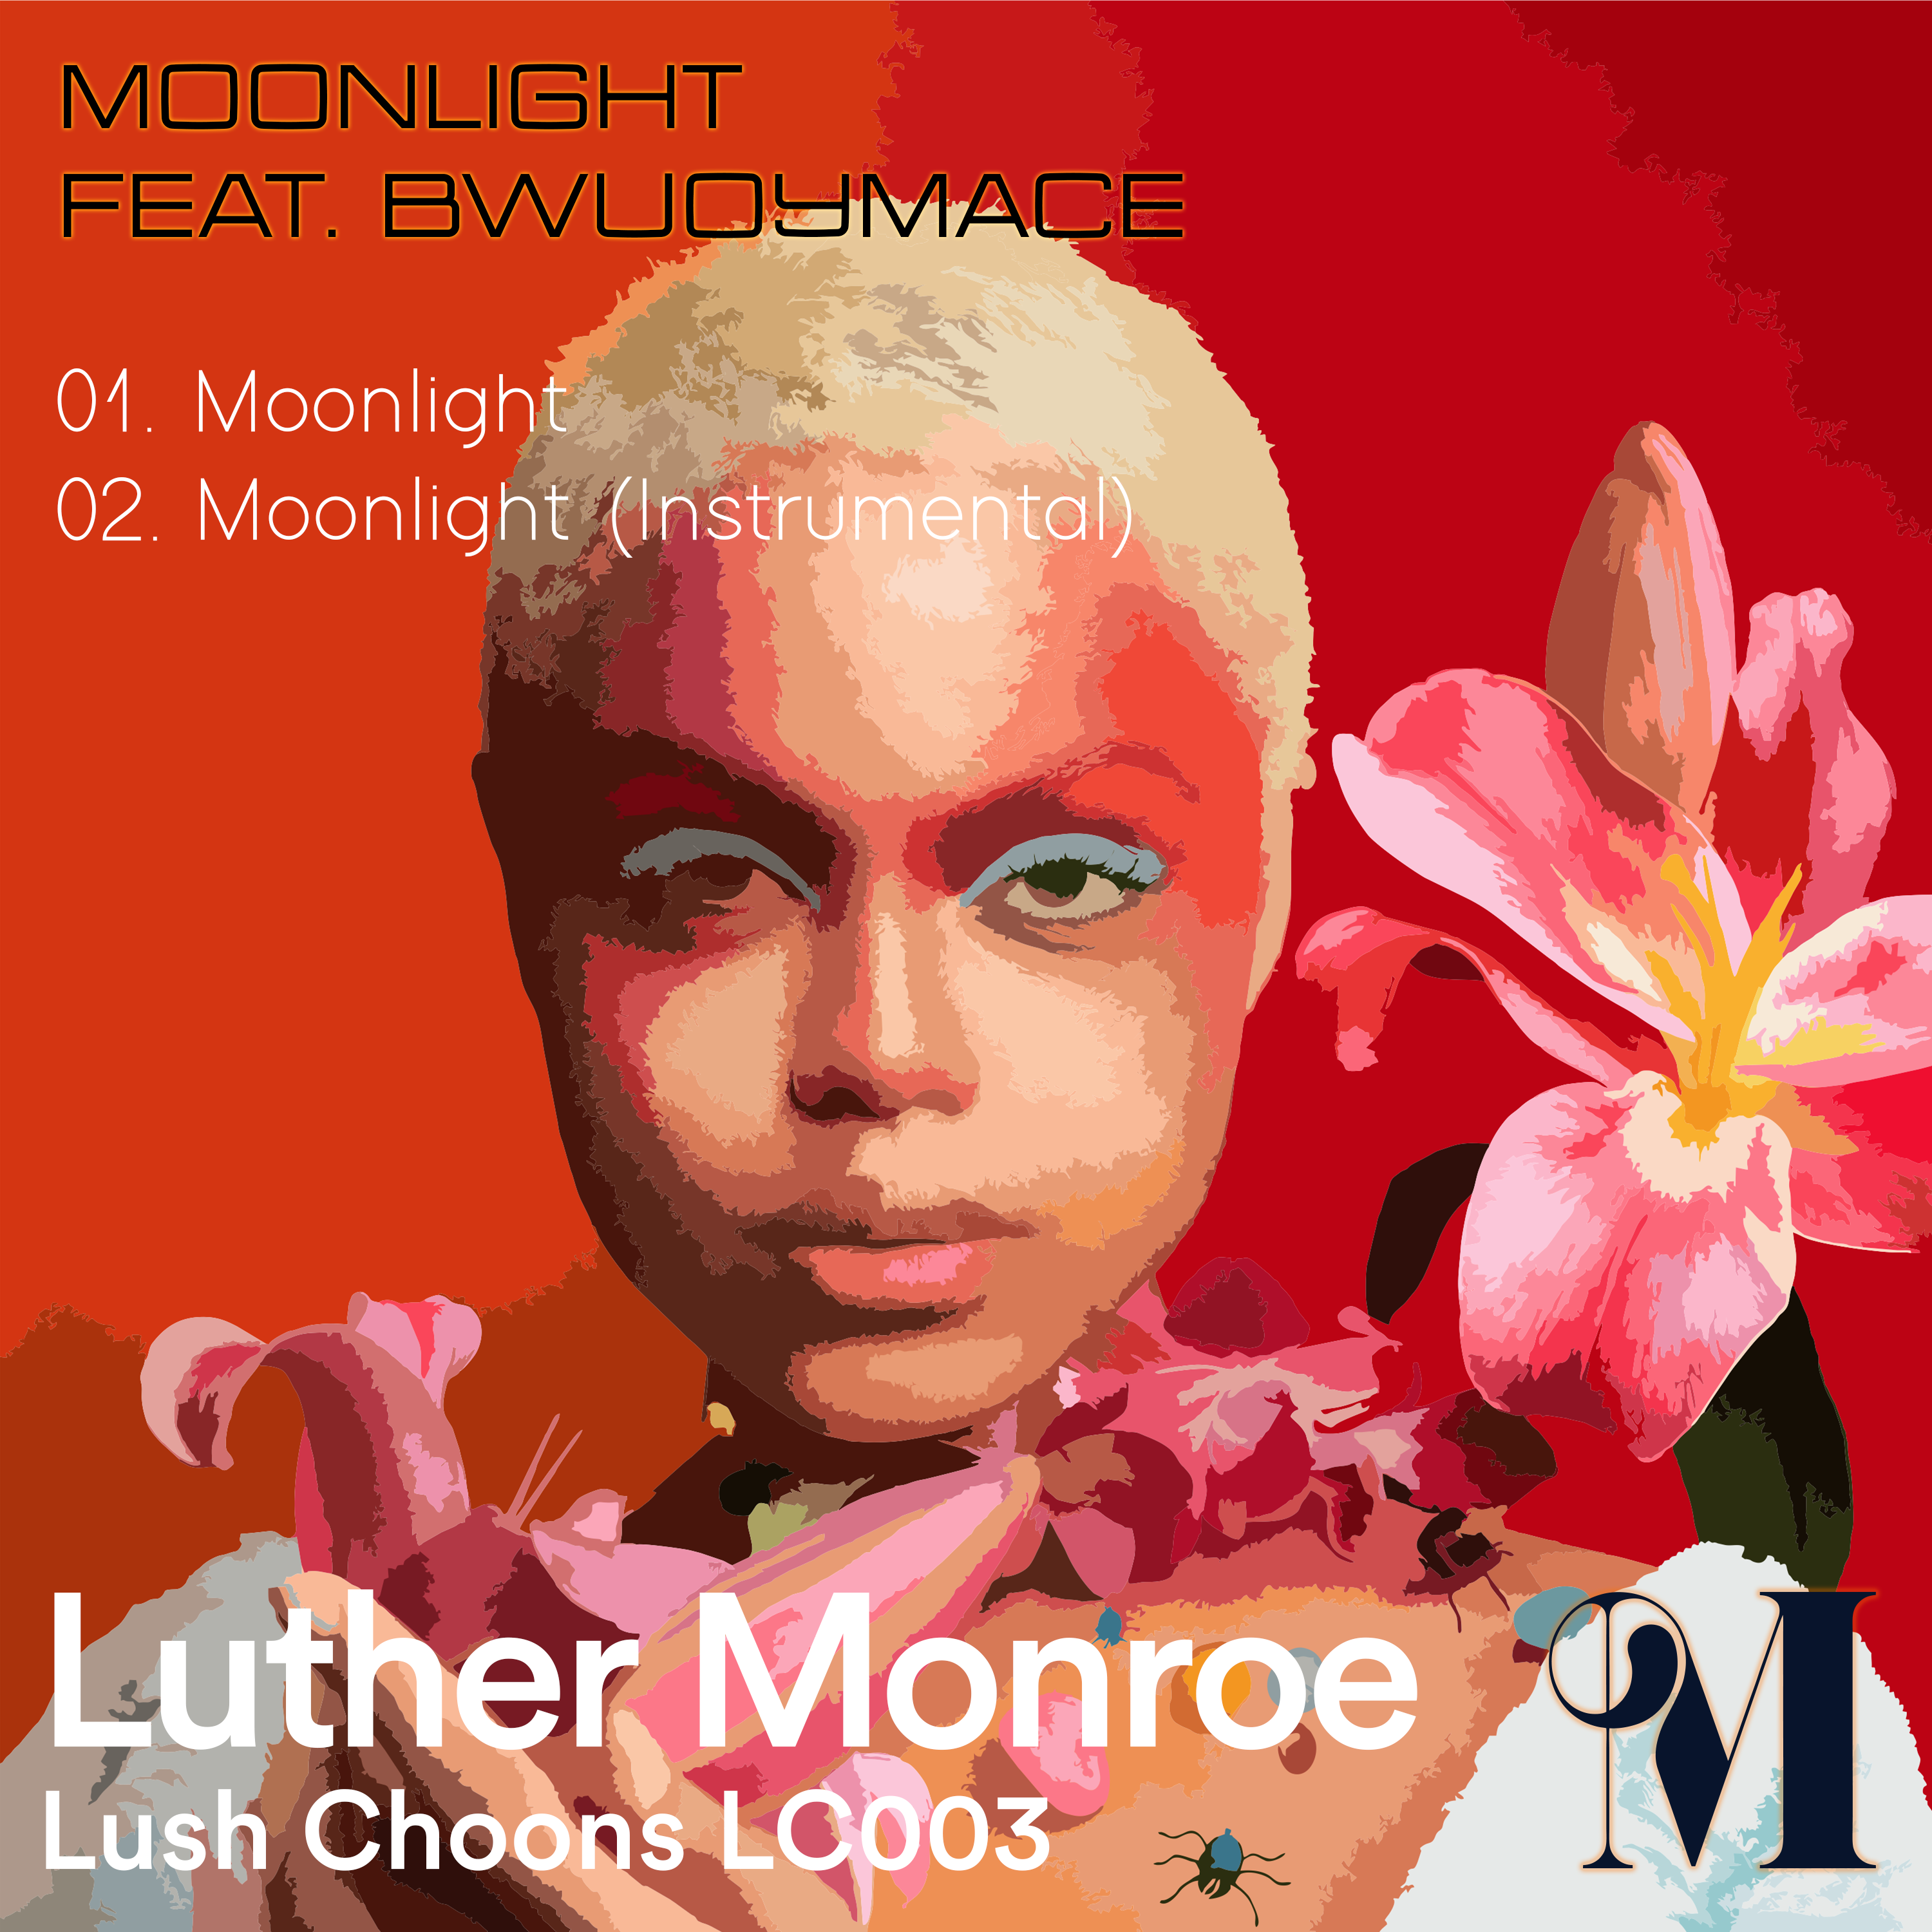 Lush Choons Luther Monroe